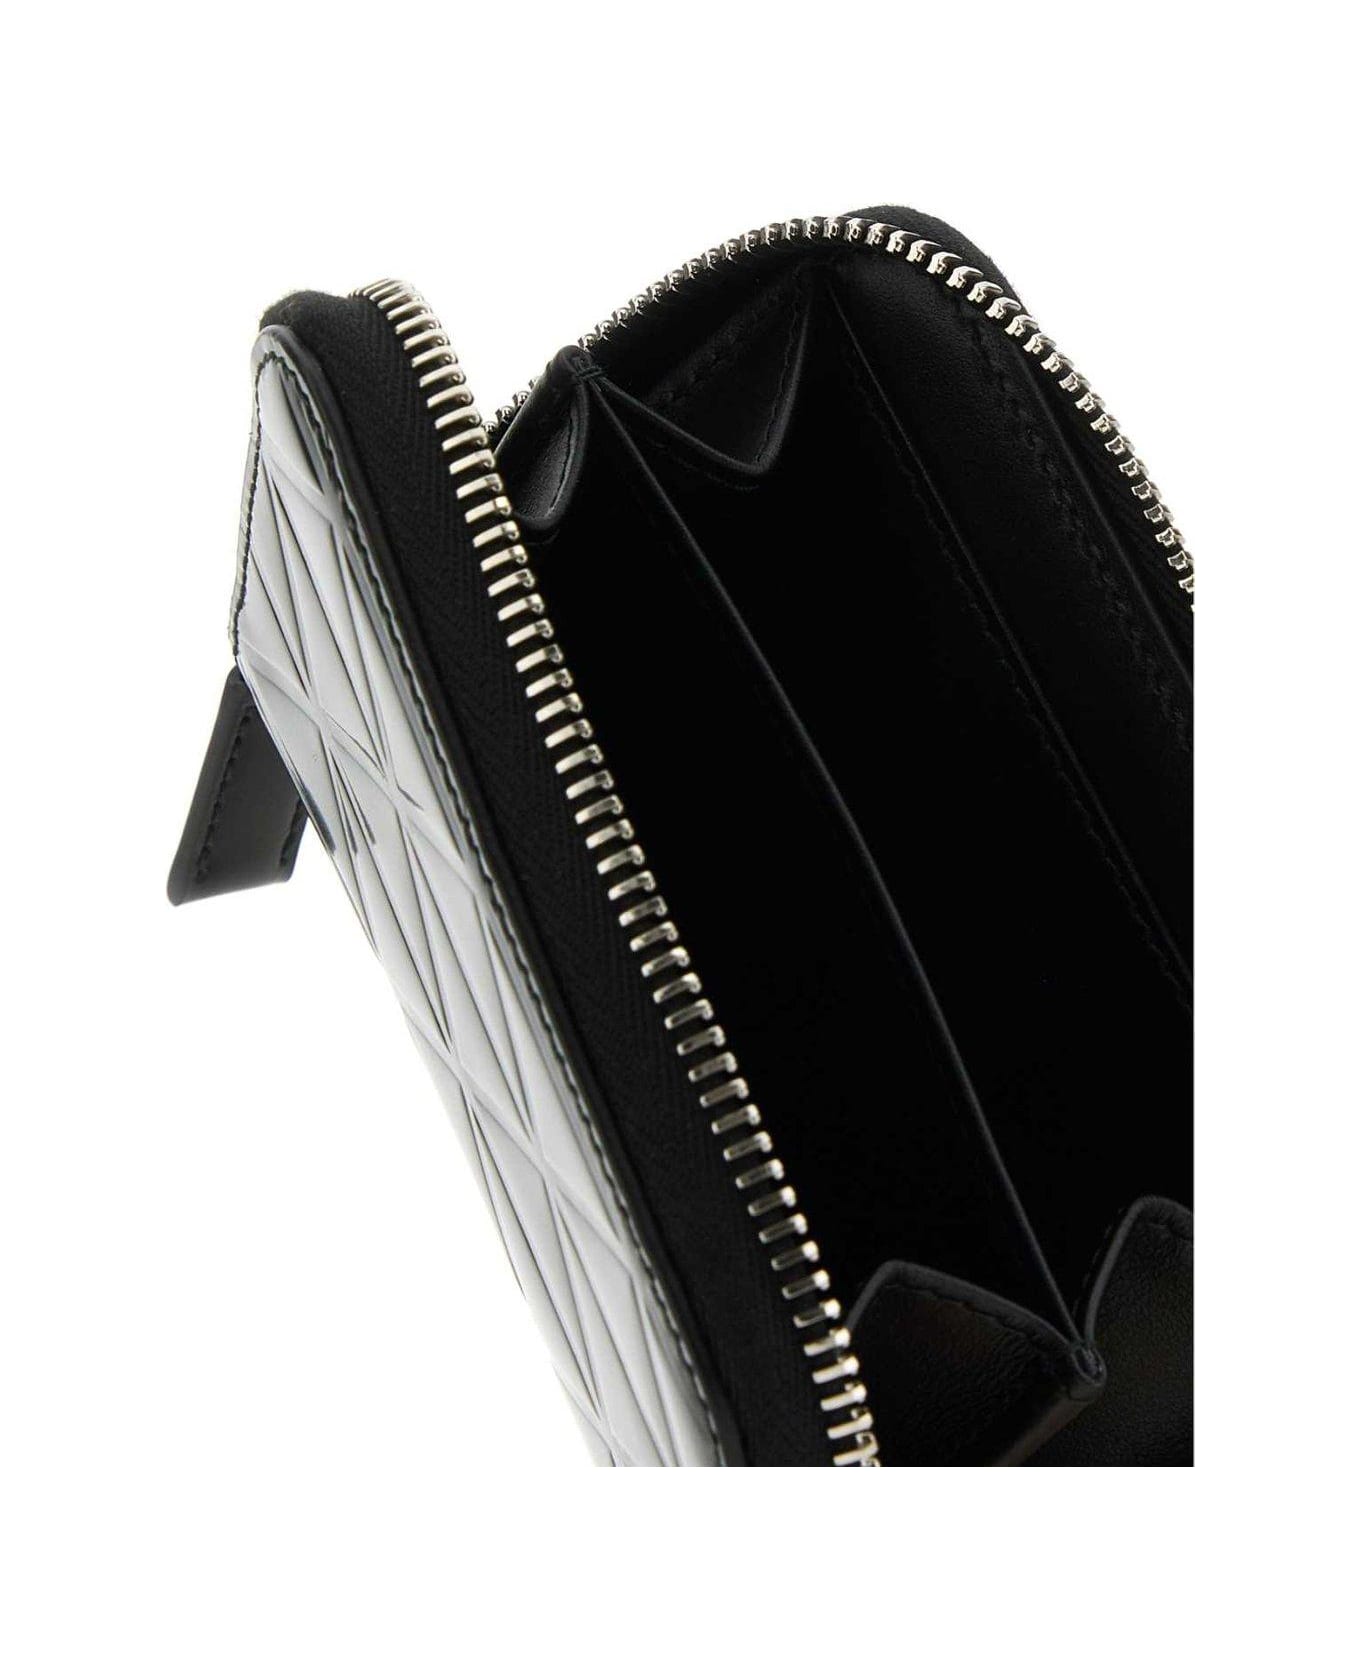 Prada Logo-detailed Zipped Wallet - Nero